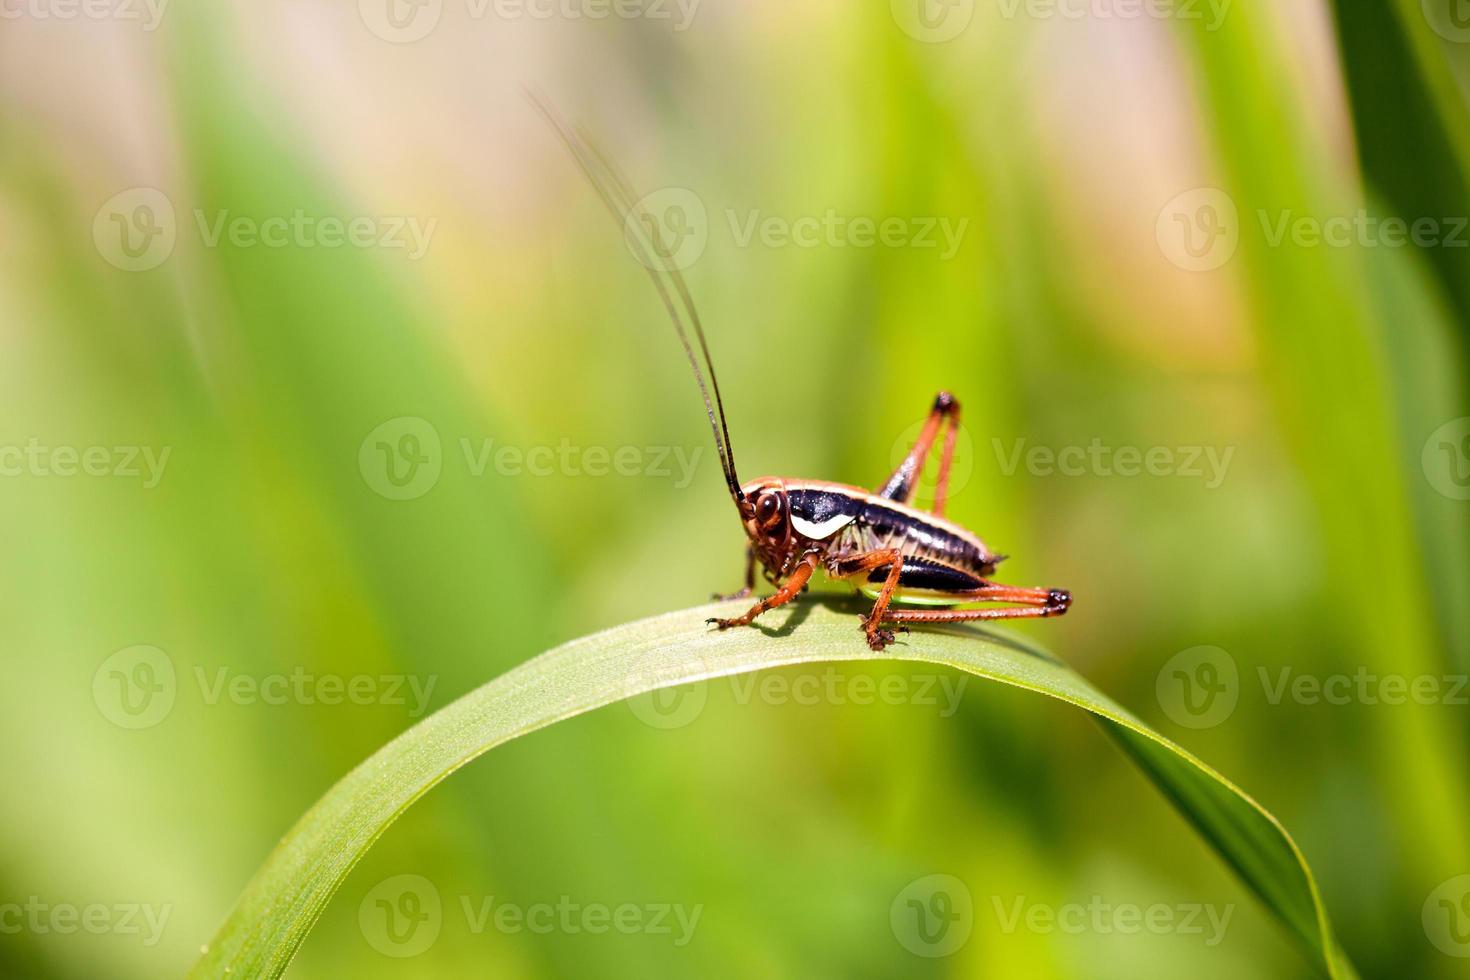 Grasshopper on leaf photo